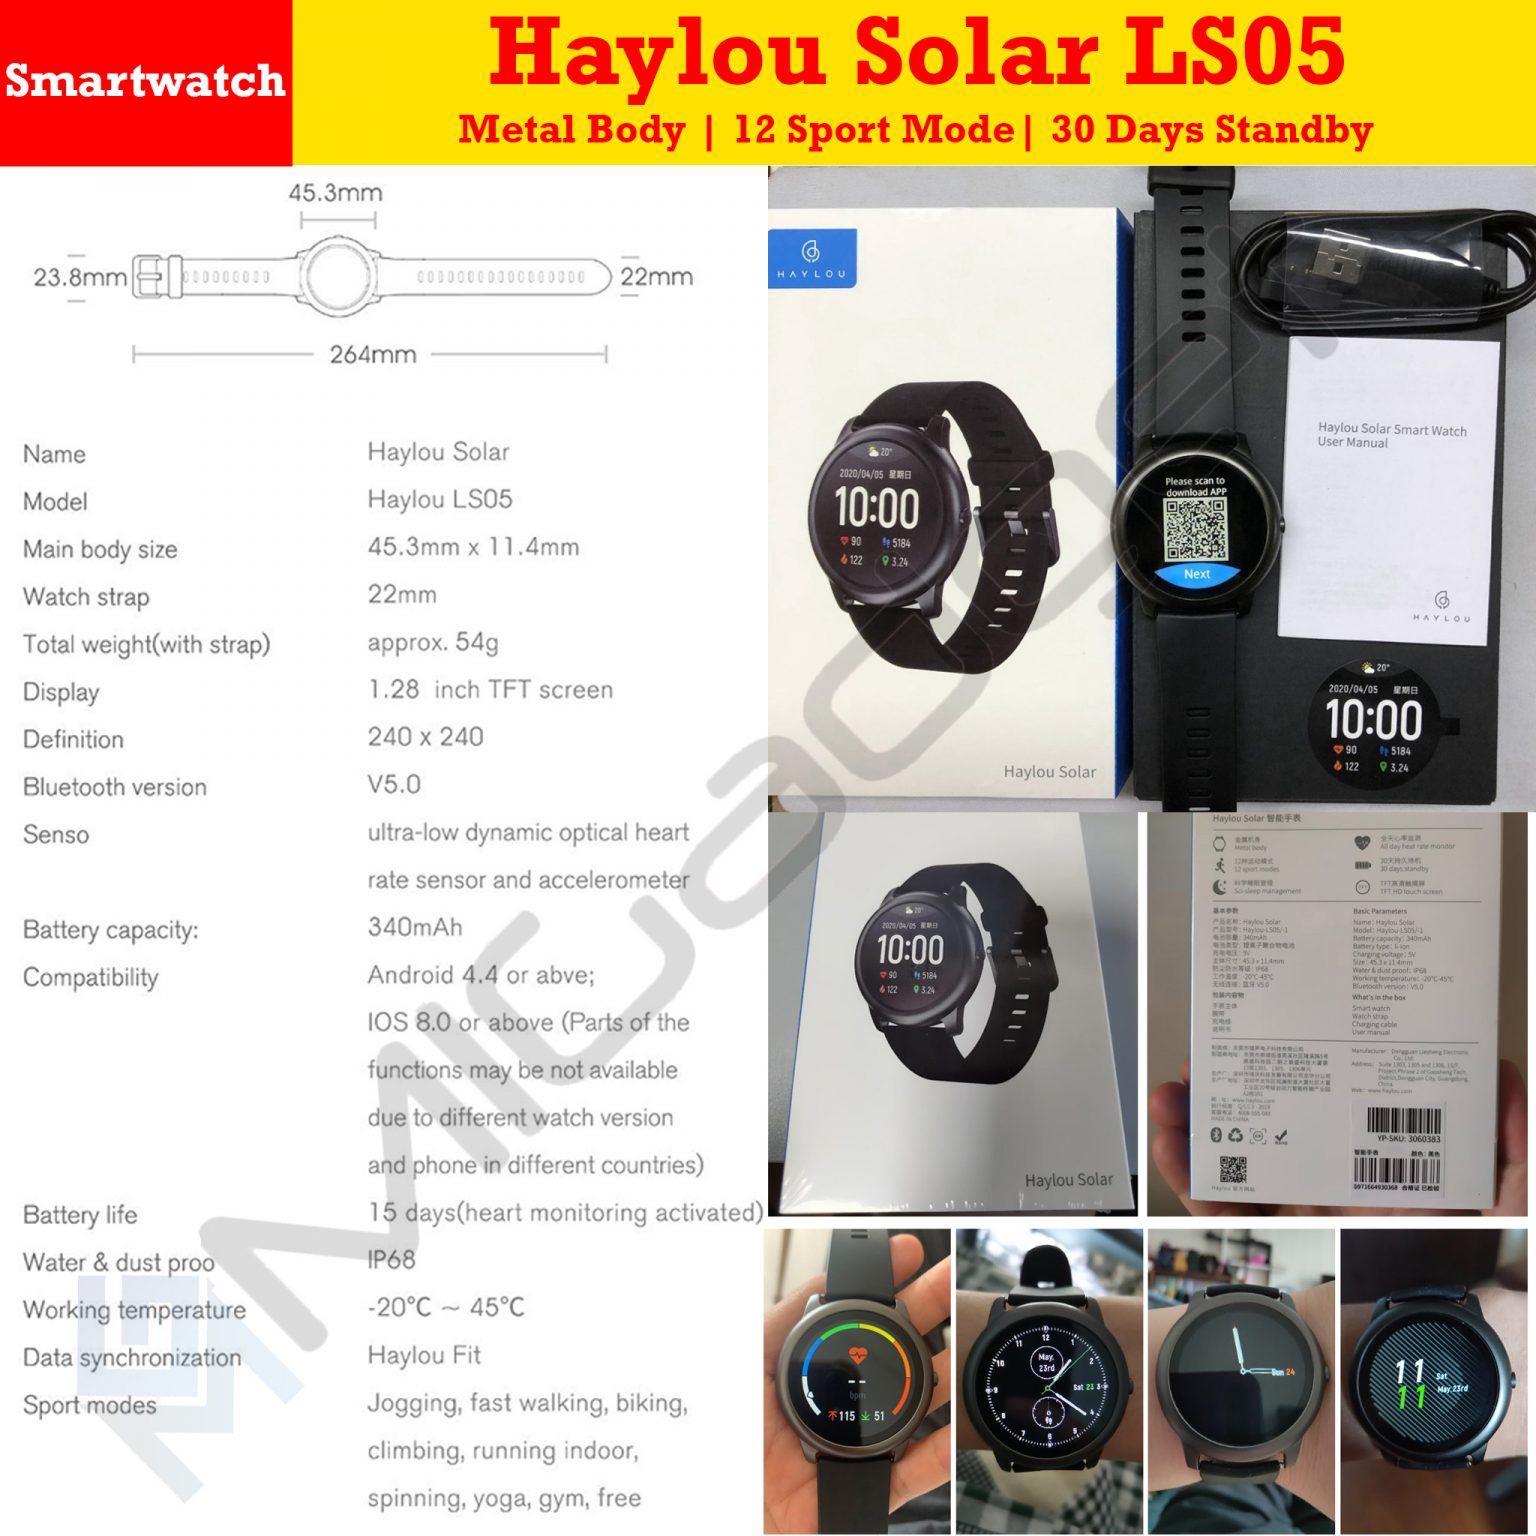 Xiaomi Haylou Solar Ls05 Характеристики